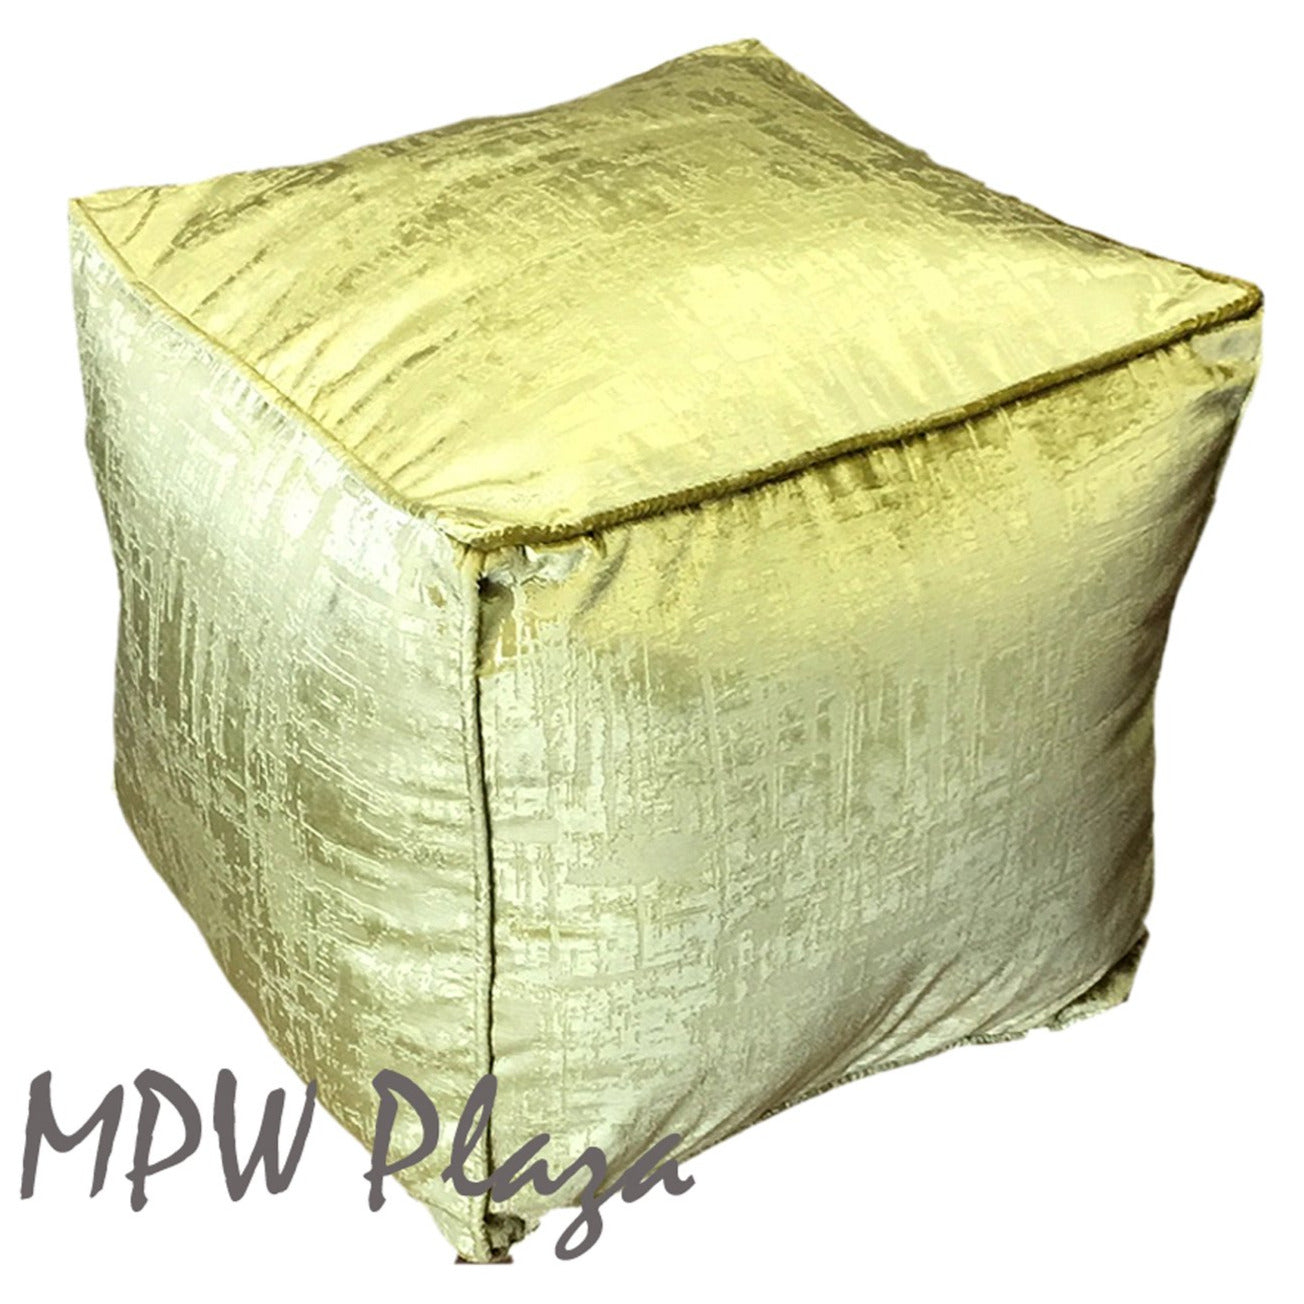 MPW Plaza® Velvet Square Pouf Green tone 18" x 18" Topshelf Velvet,  ottoman (Stuffed) freeshipping - MPW Plaza®